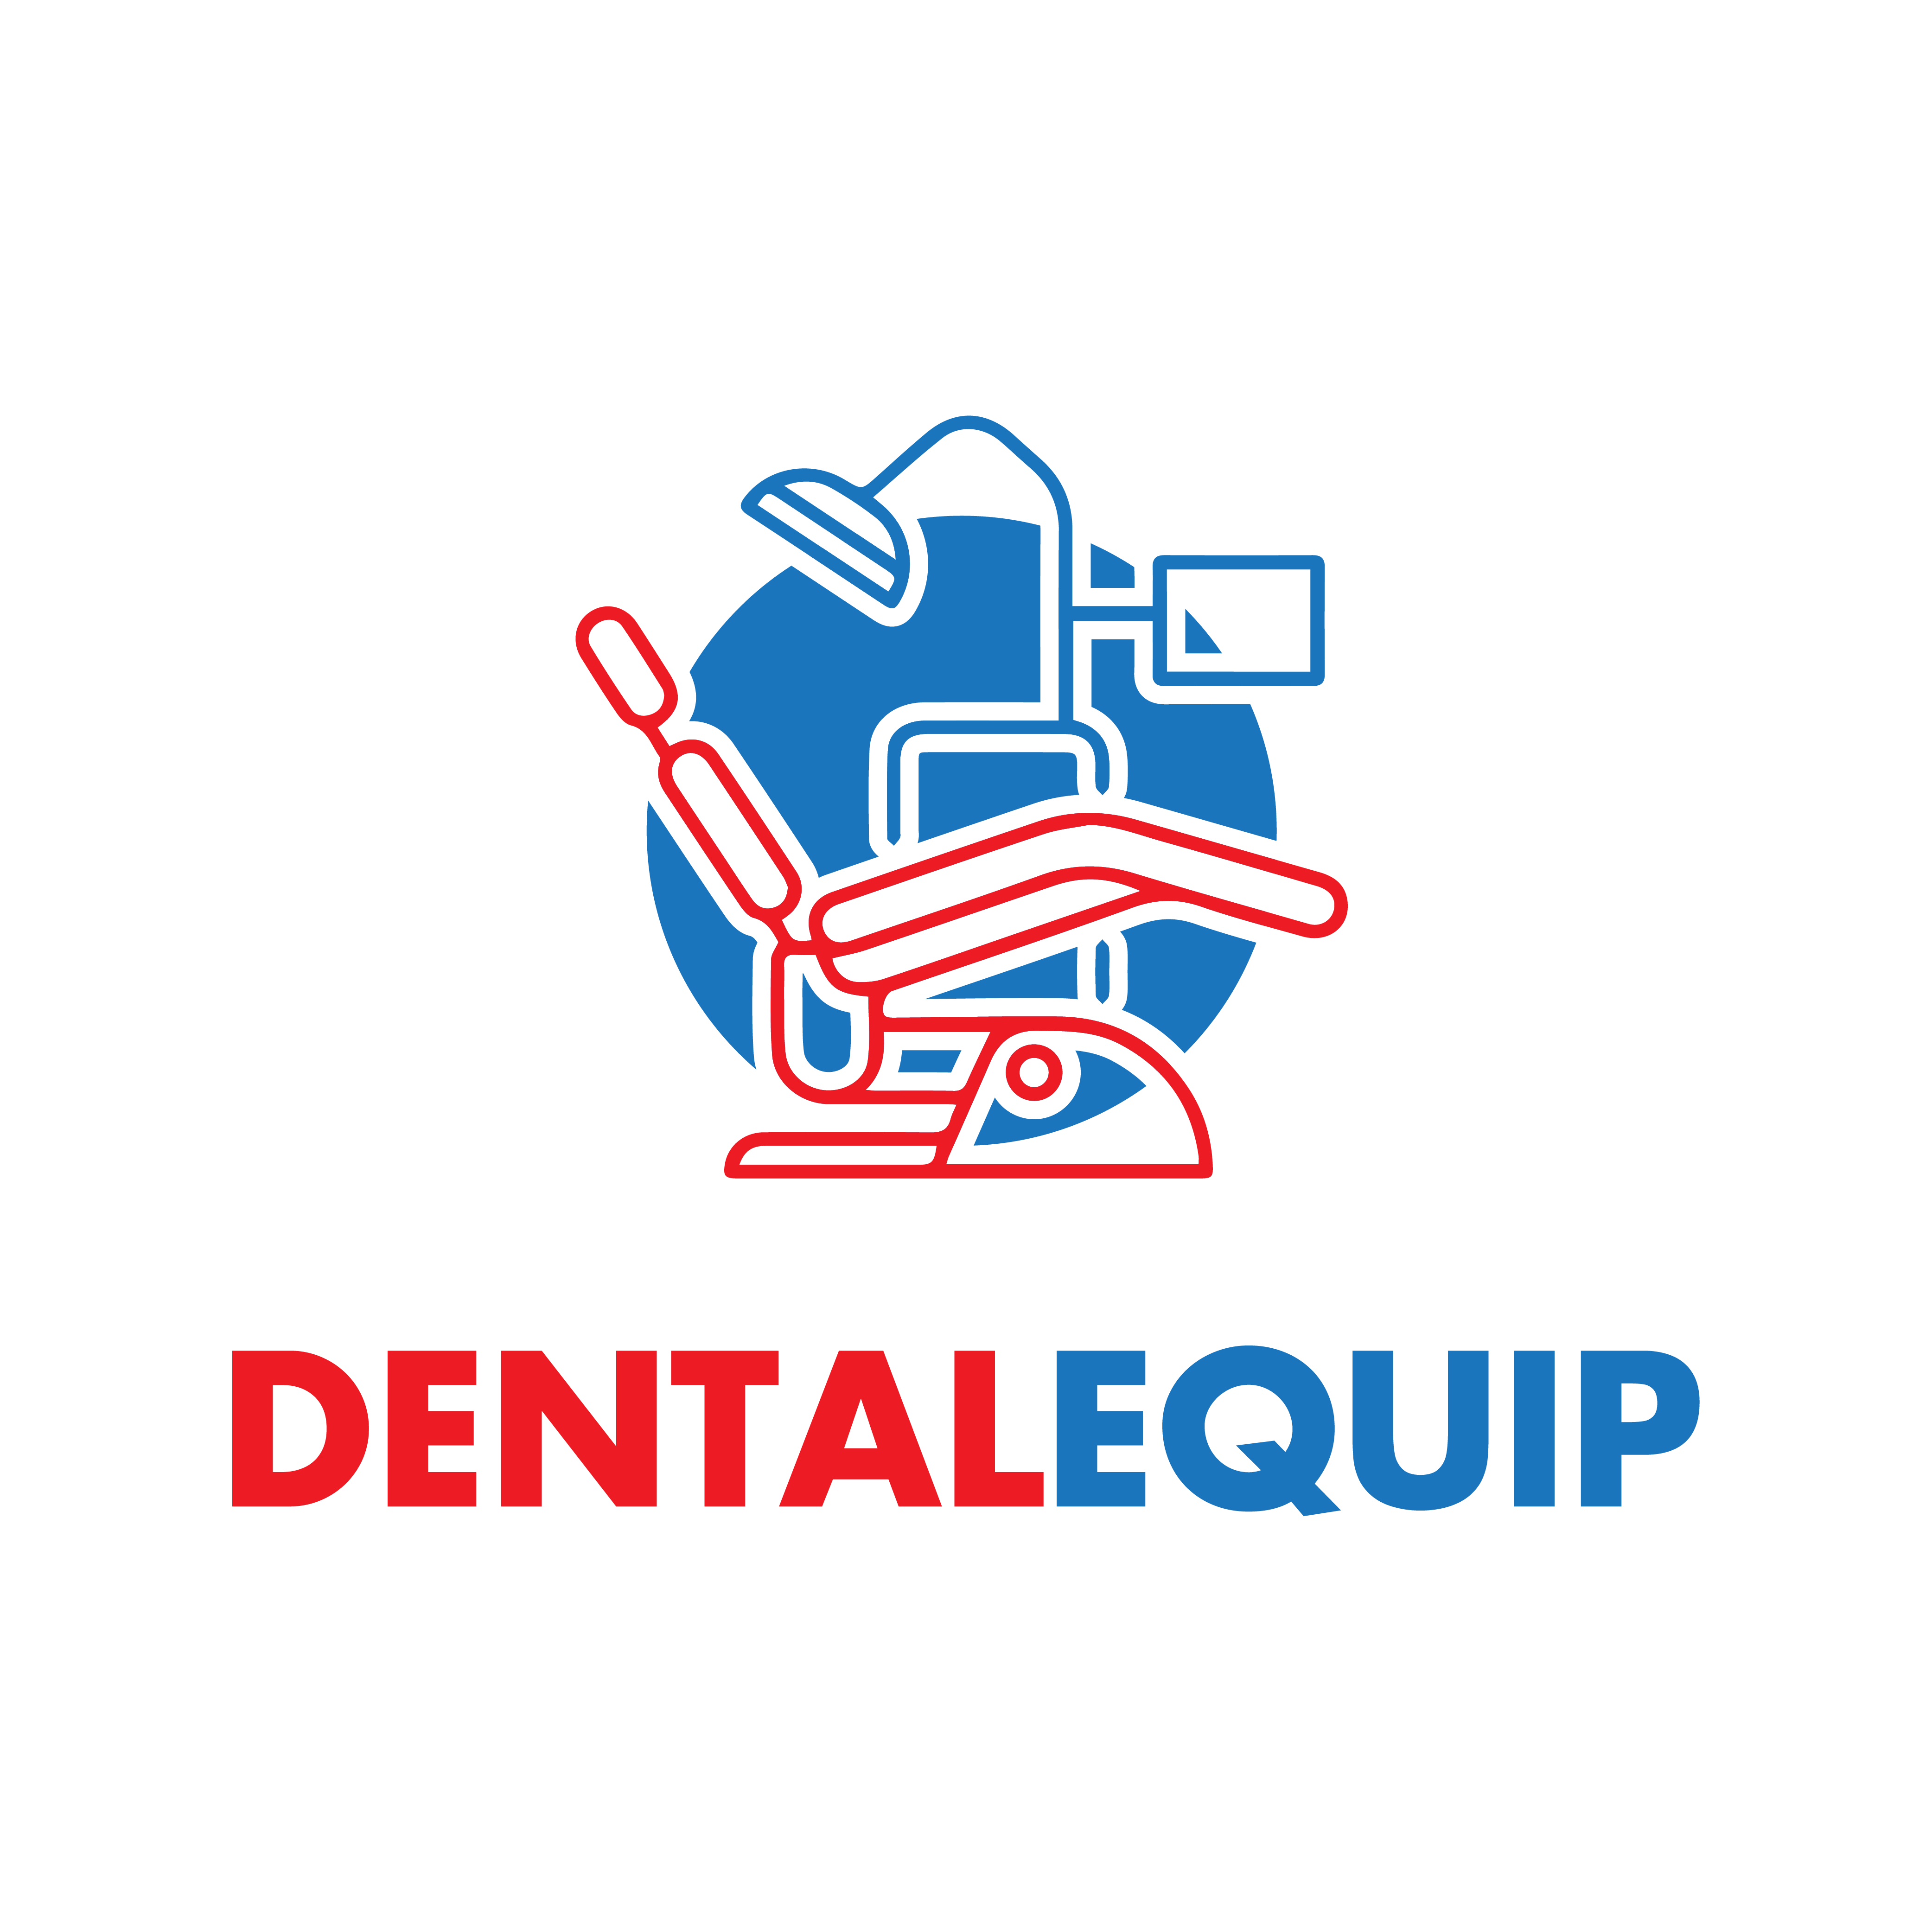 dental-equip-logo